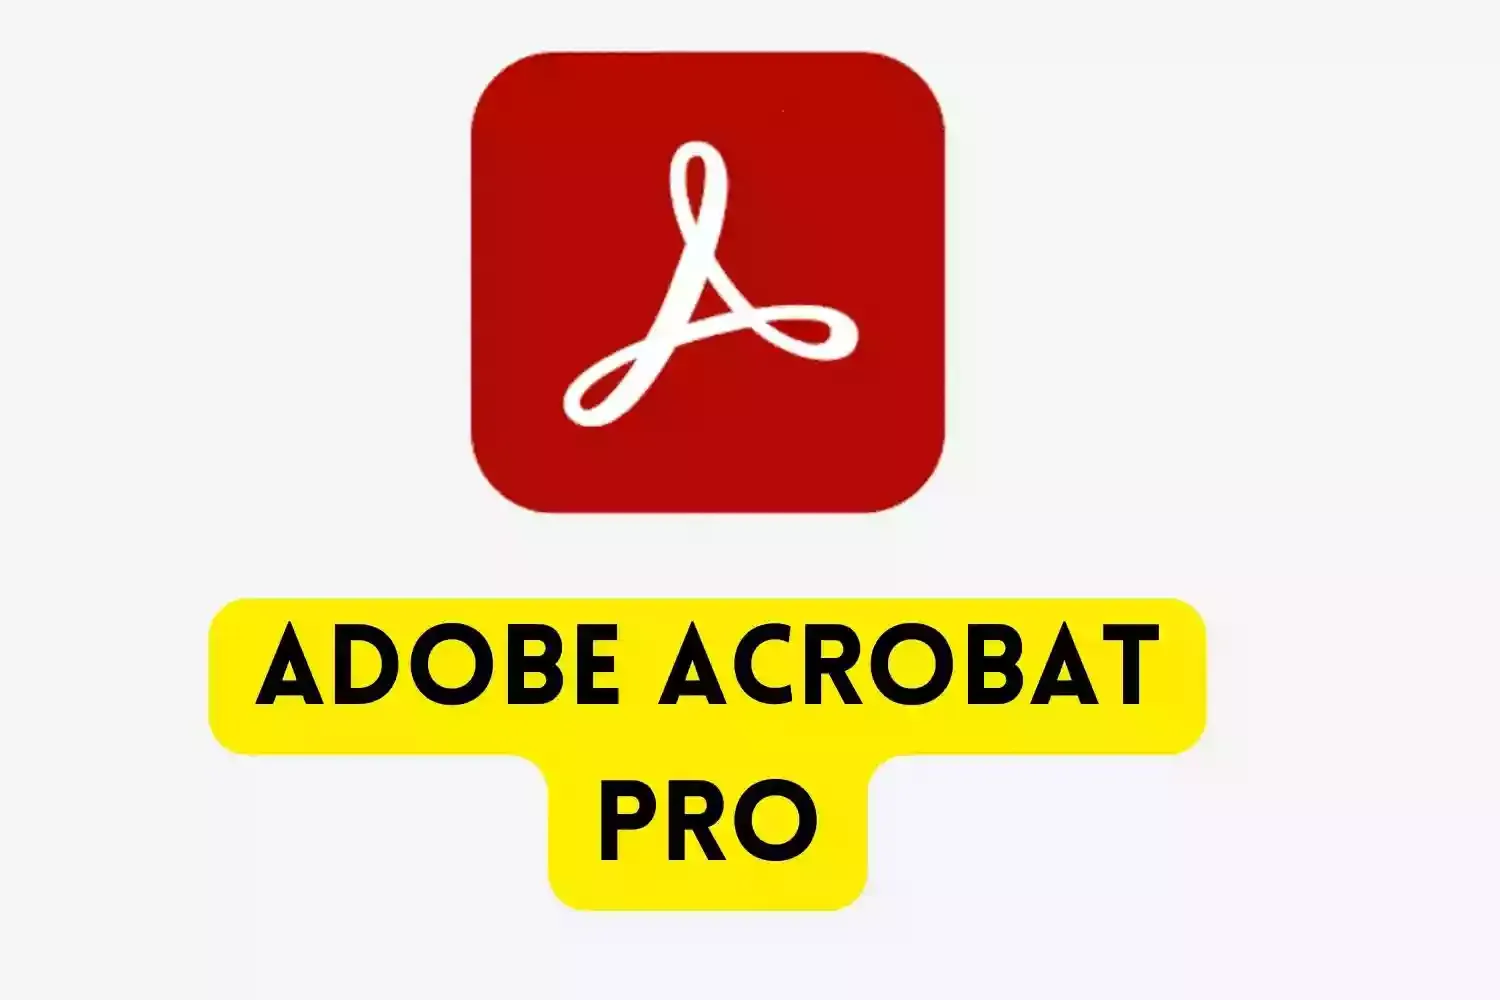 How to remove password from PDF through Adobe Acrobat Pro